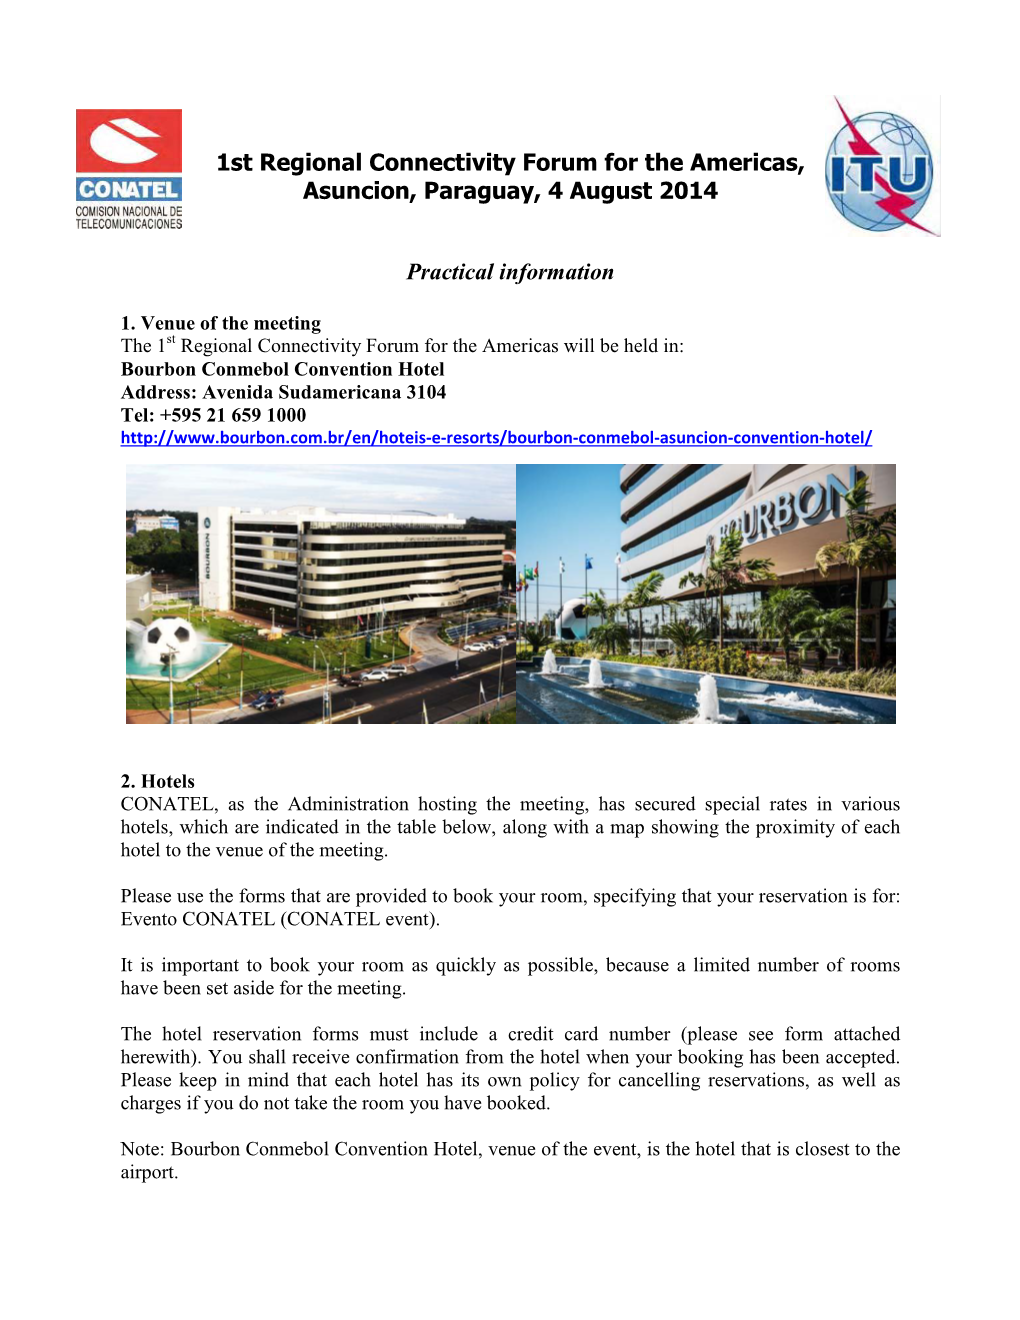 1St Regional Connectivity Forum for the Americas, Asuncion, Paraguay, 4 August 2014 Practical Information